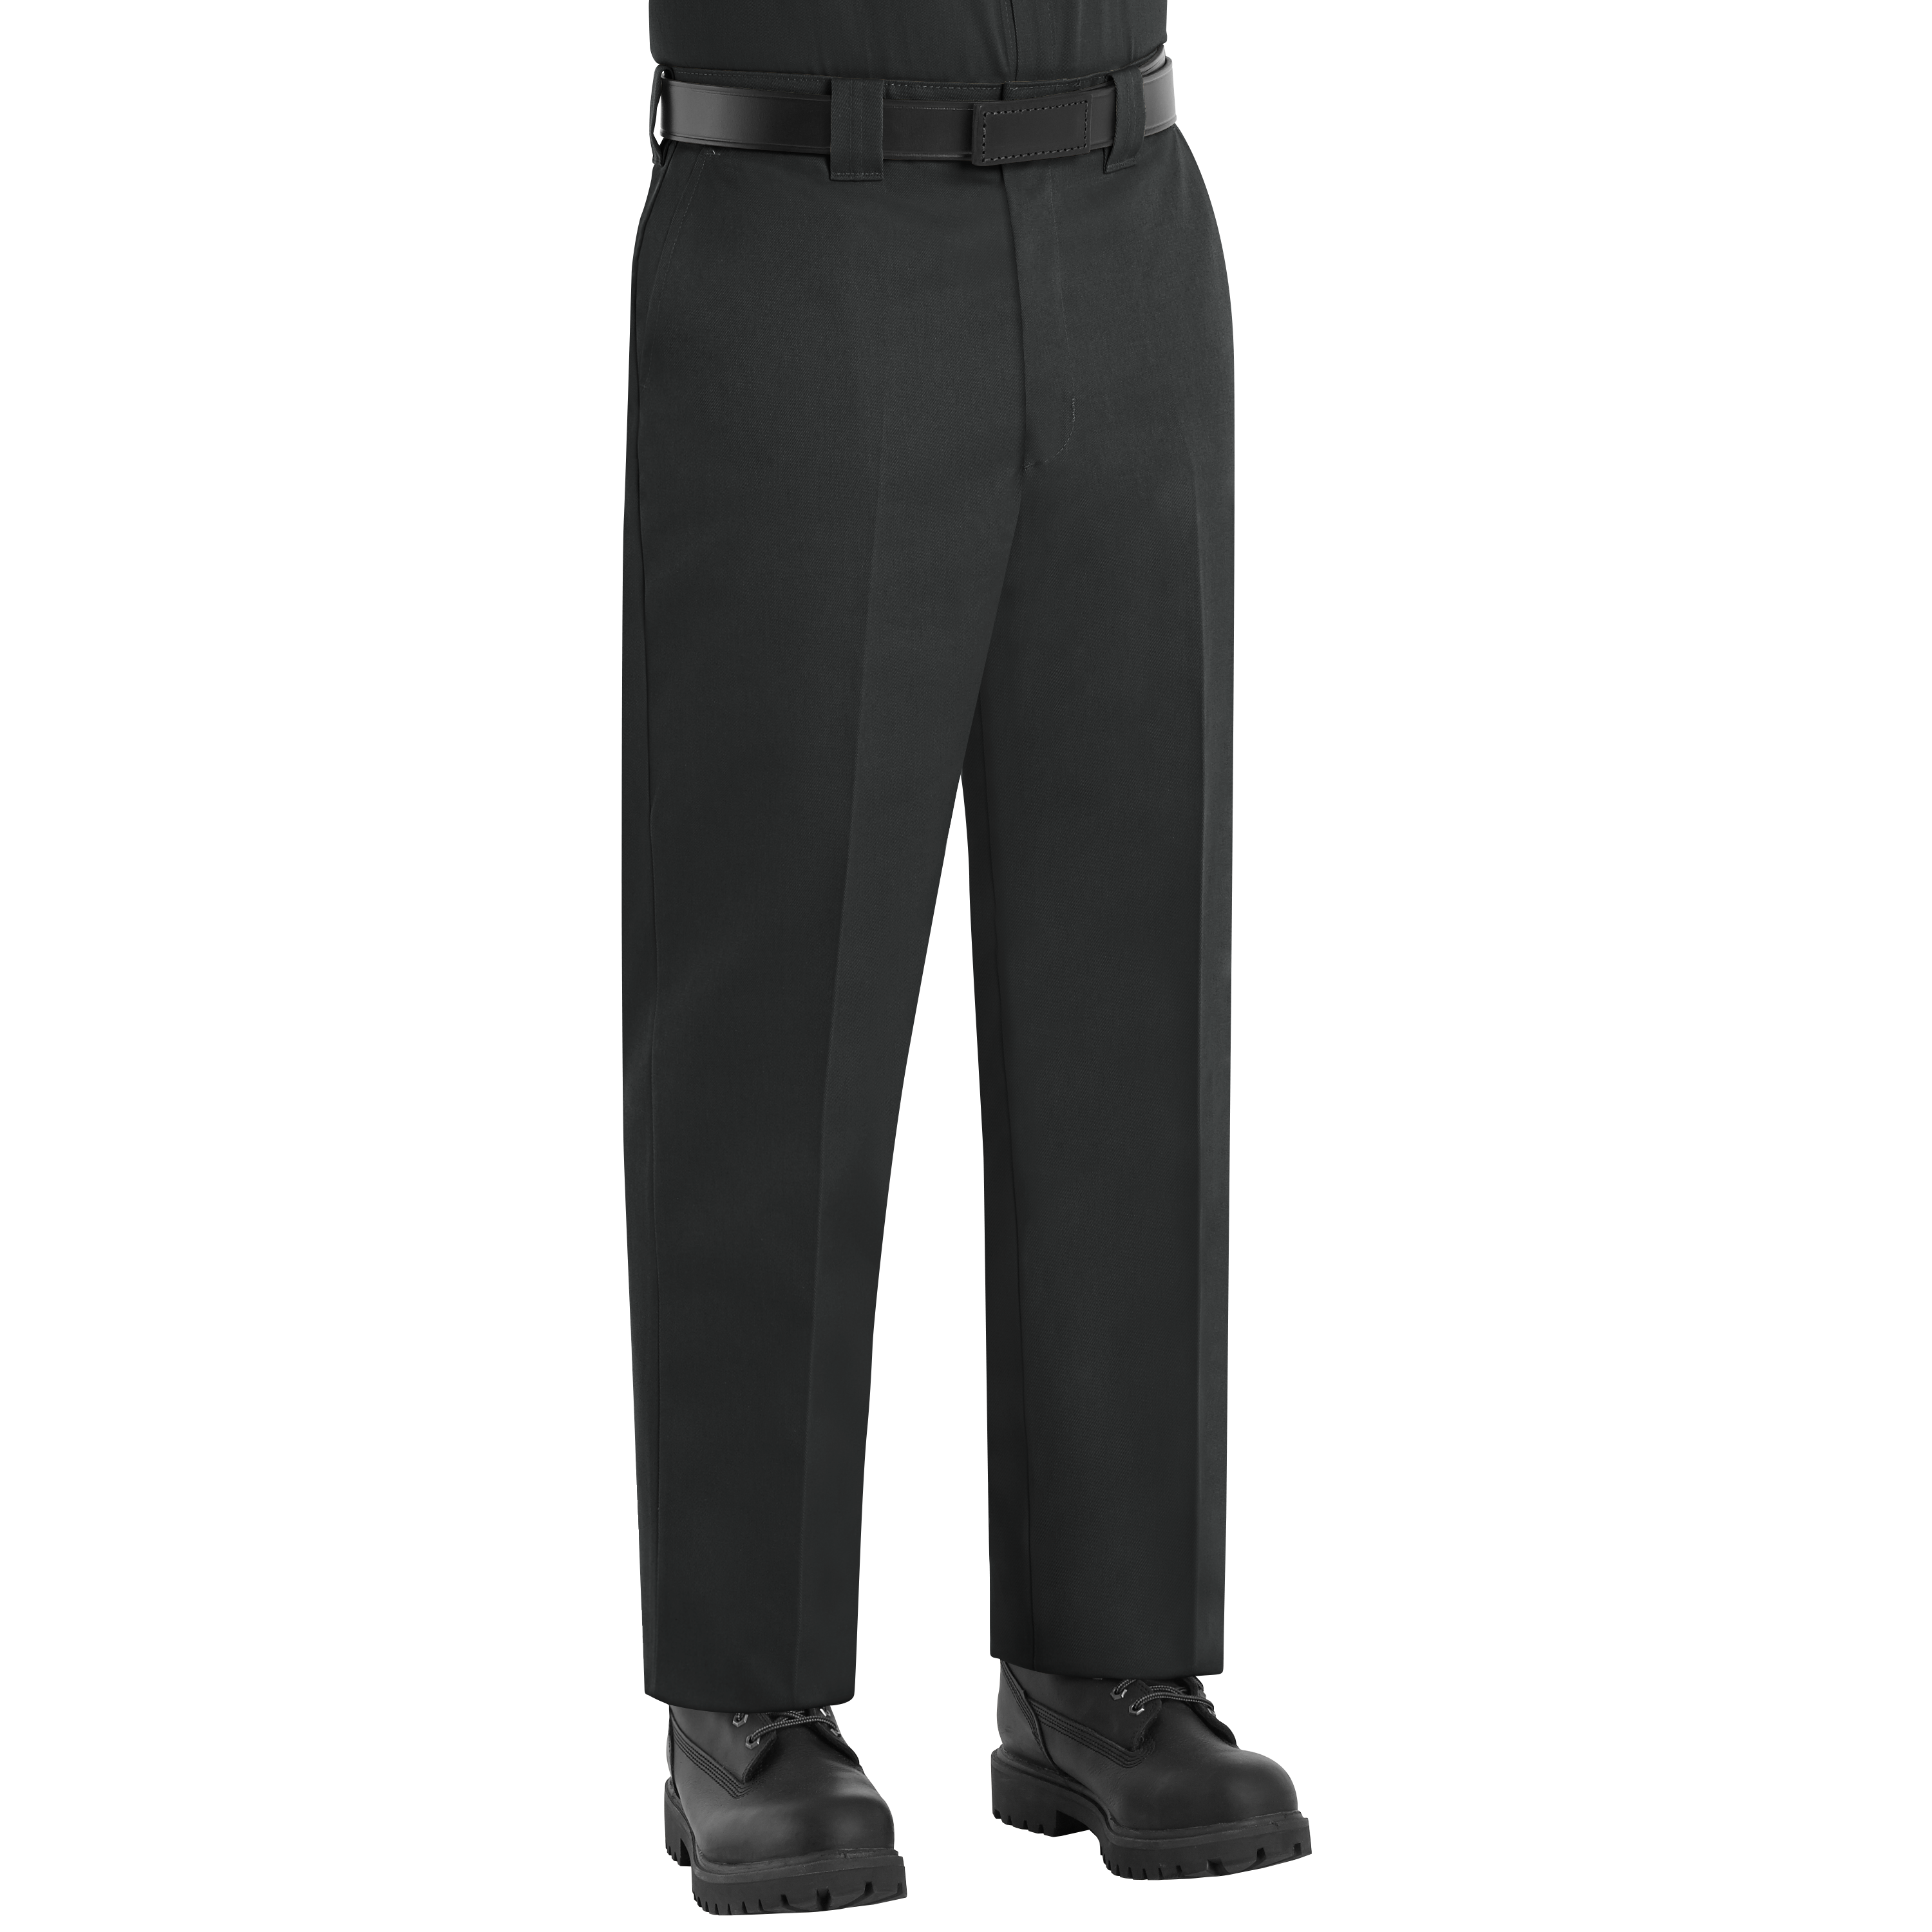 Office slacks pants for women ladies black pants for work school uniform  Small up to 4XL plus size | Lazada PH